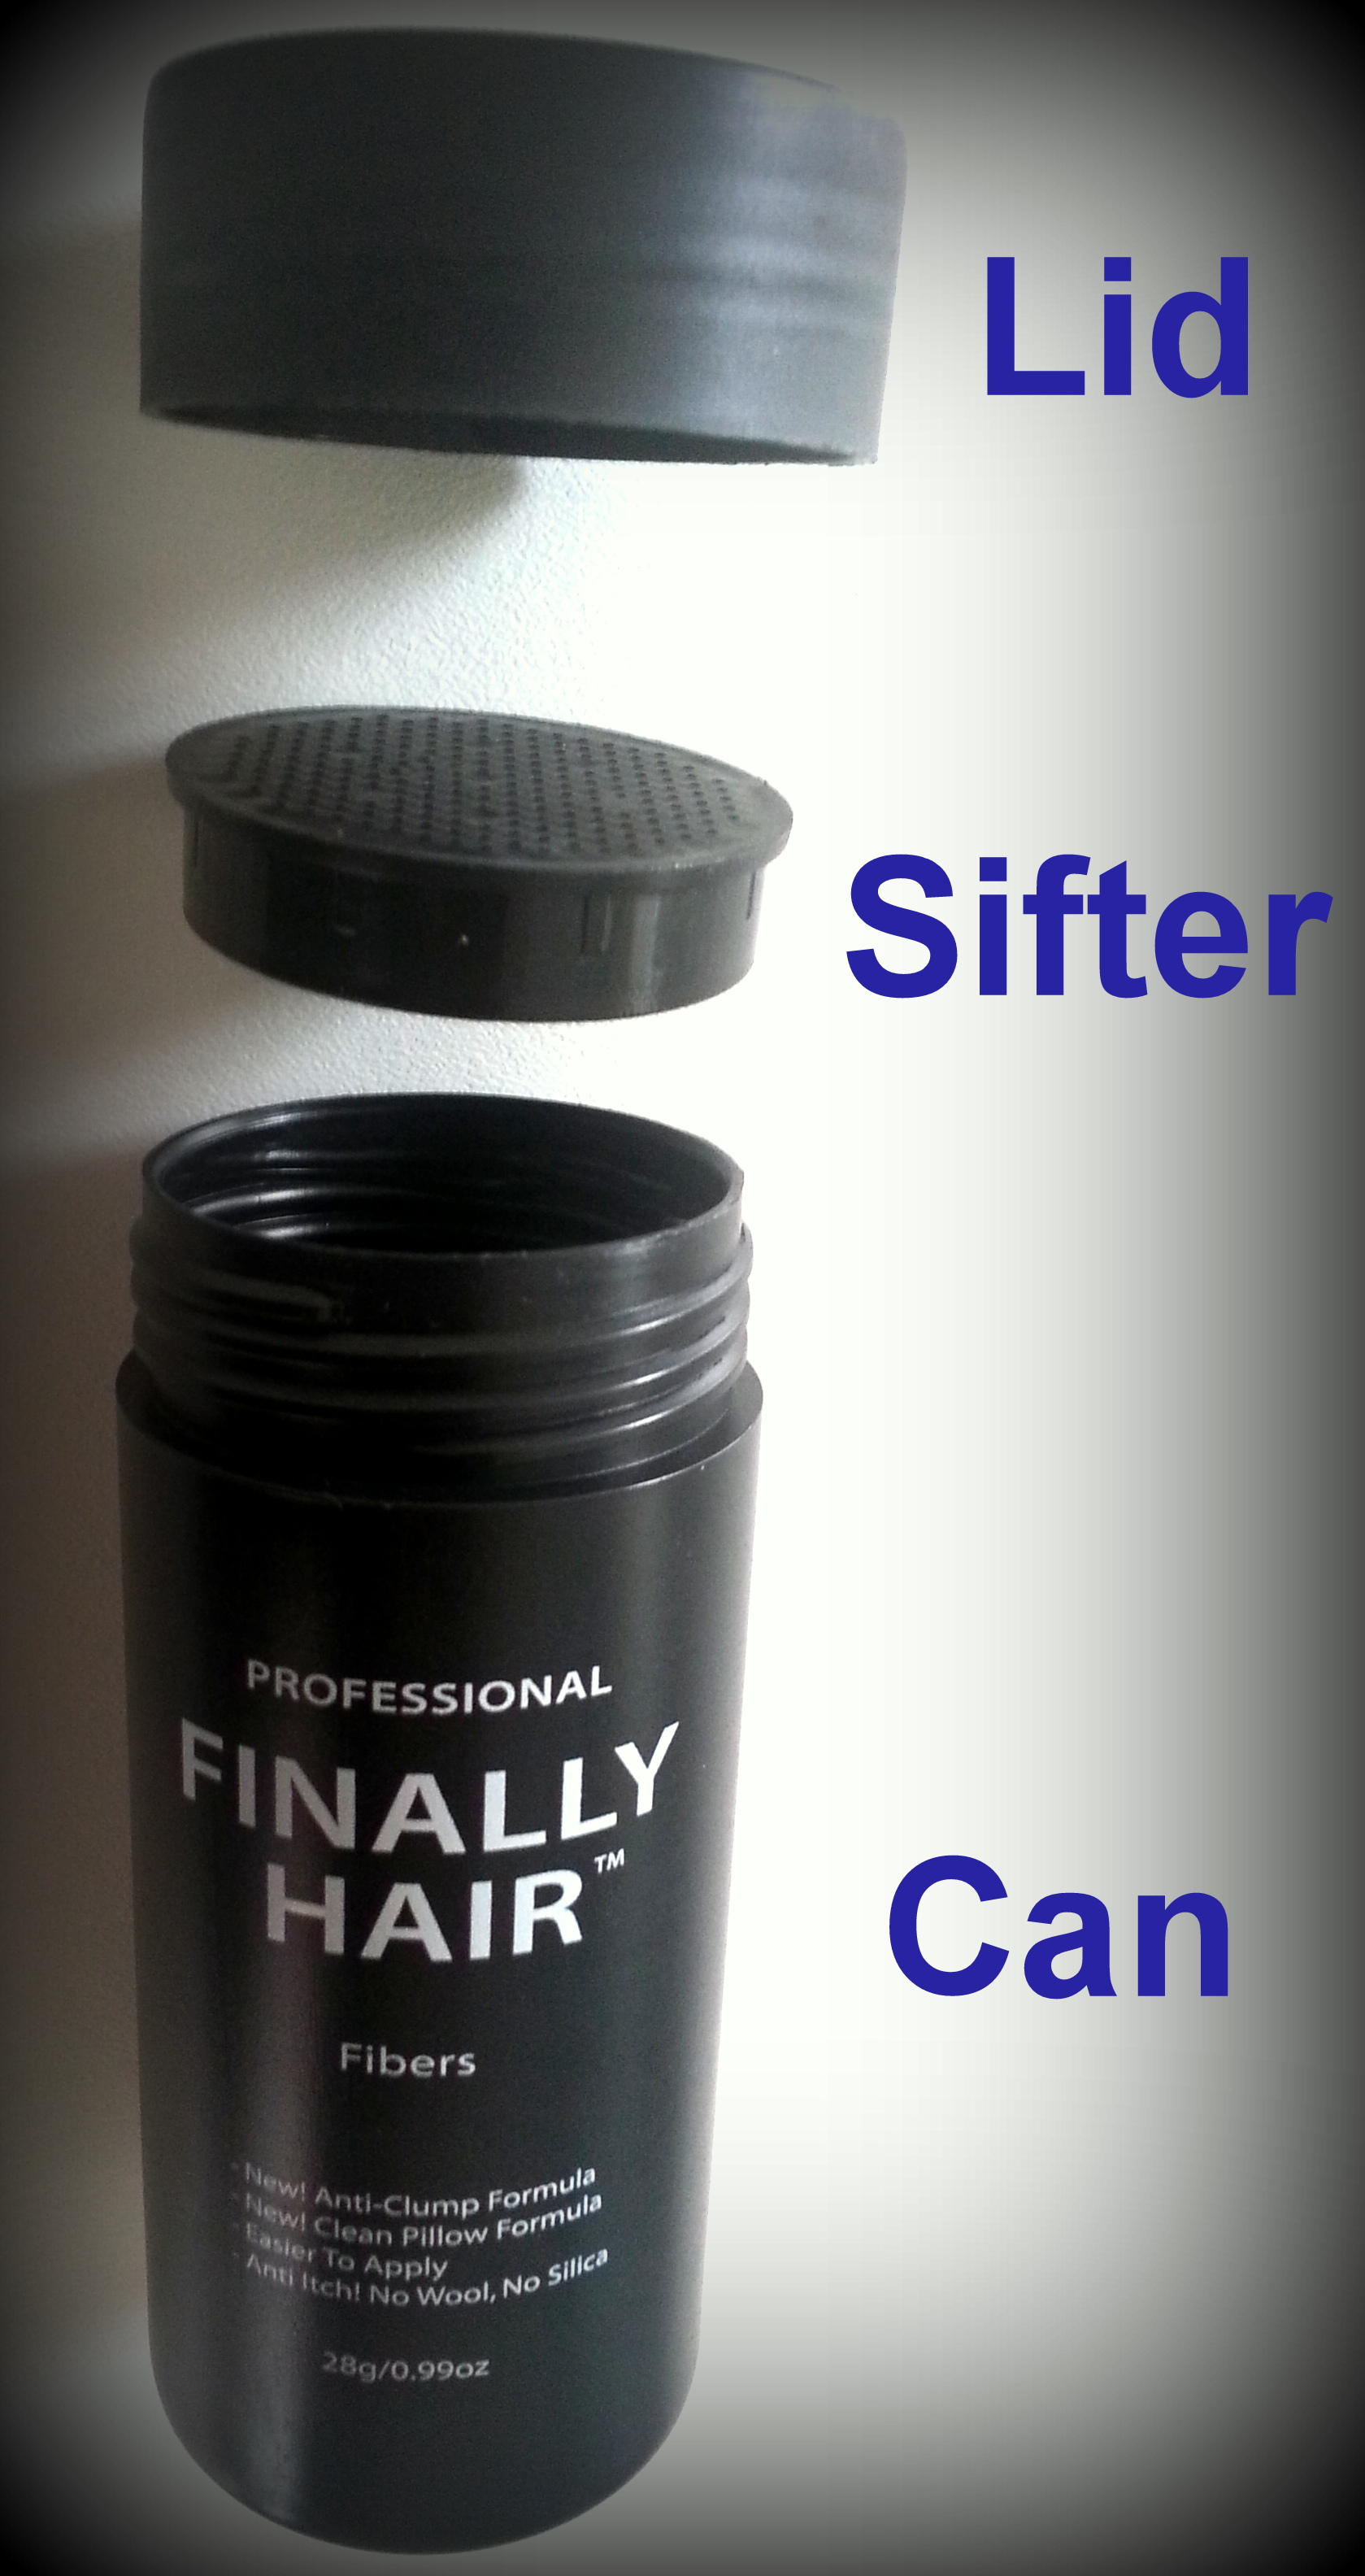 Hair Fiber Refill Info : hair building fiber - Finally Hair®, Hair Building  Fiber - Finally Hair®